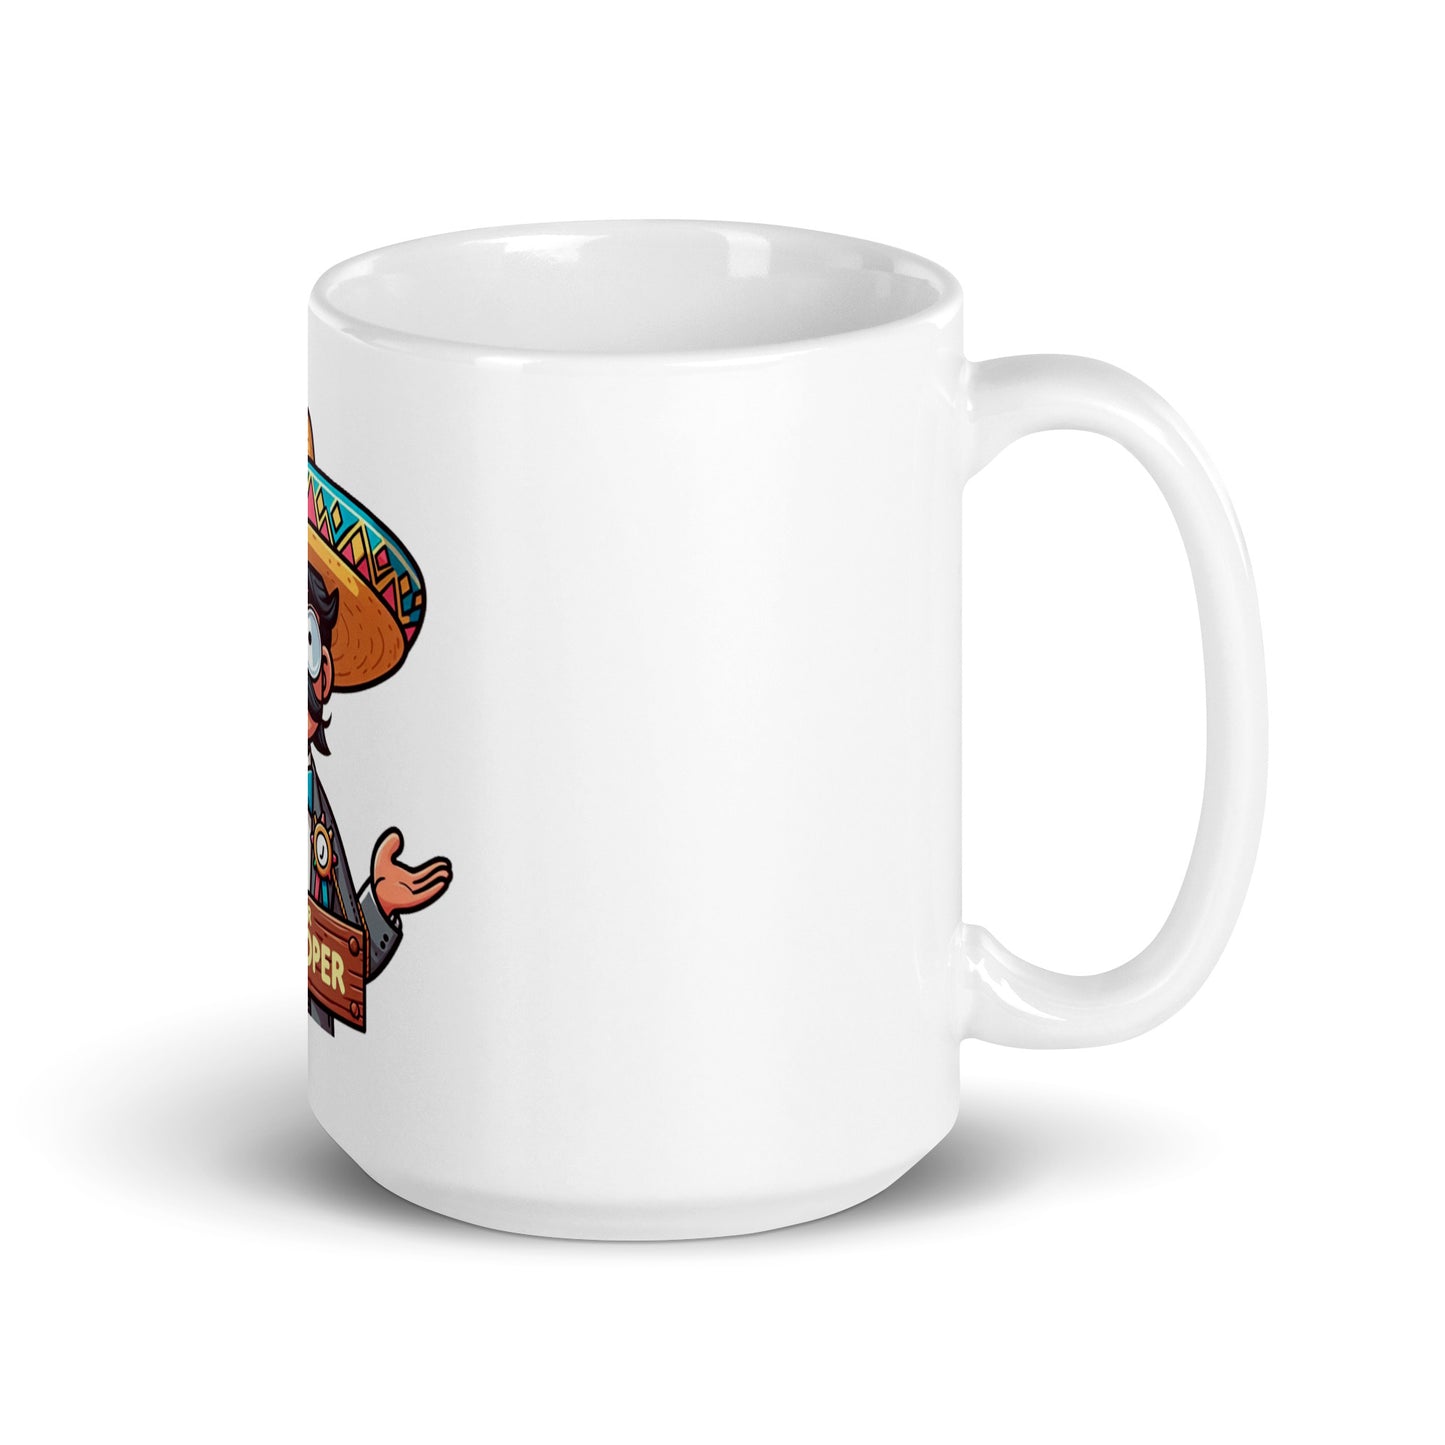 Señor Developer mug